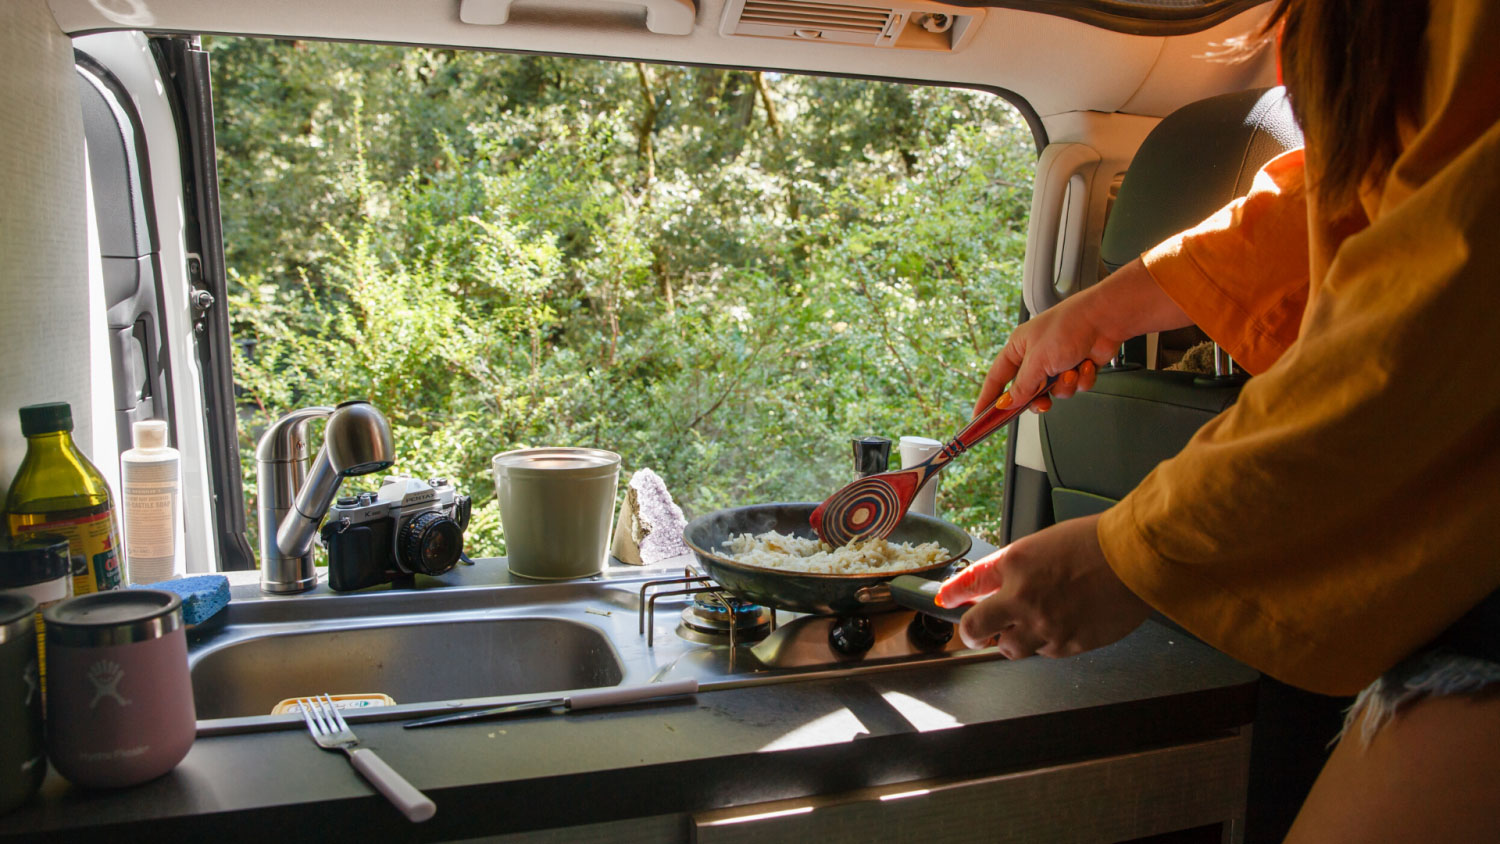 Cooking In the campervan